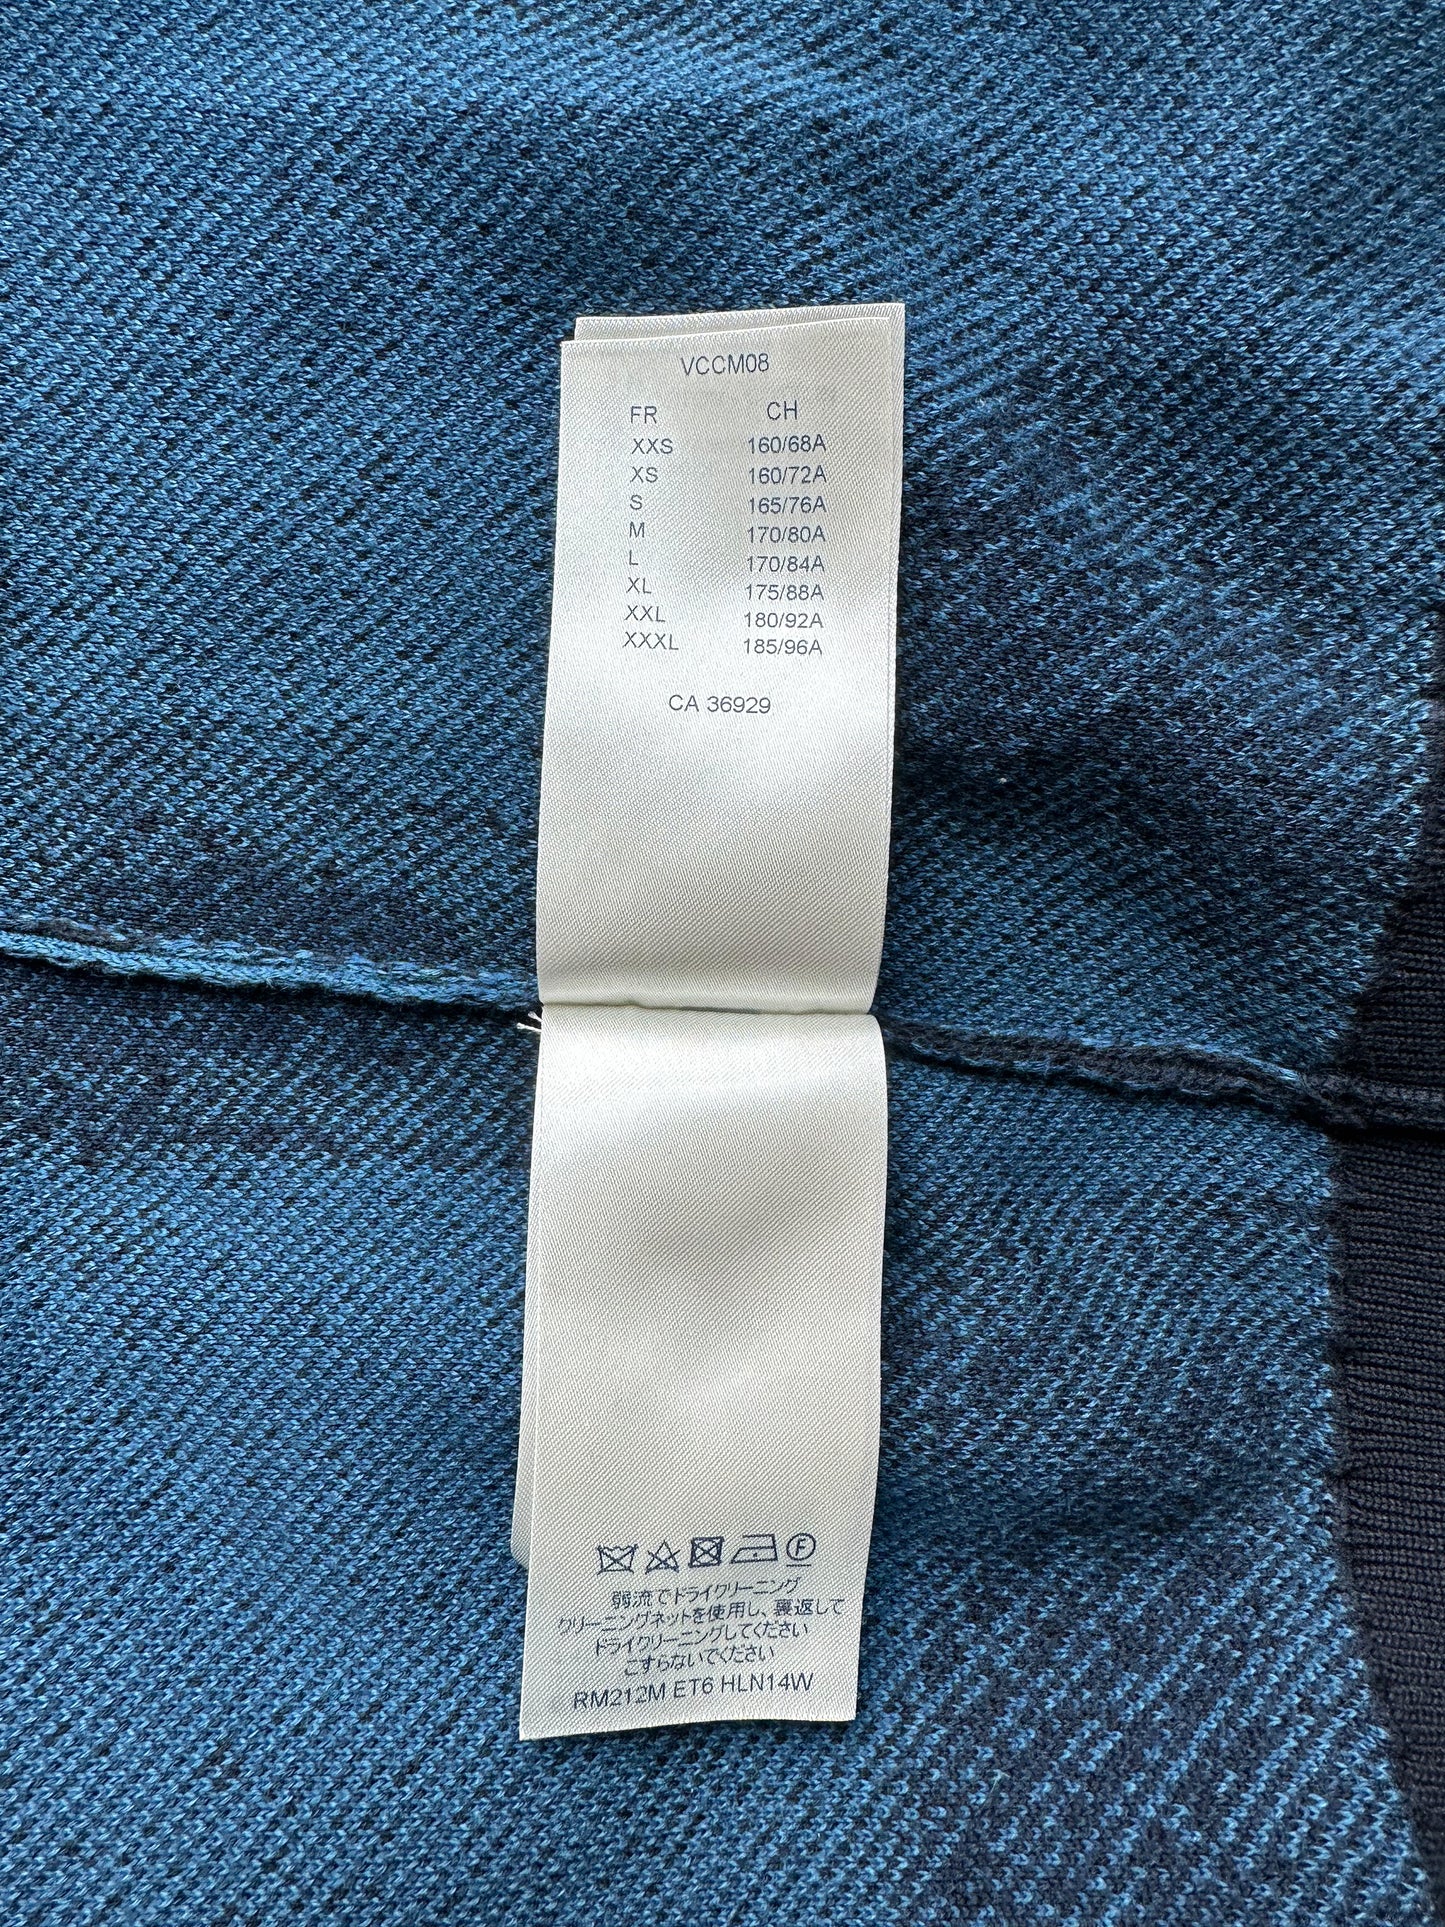 Louis Vuitton Damier Salt Print Sweater